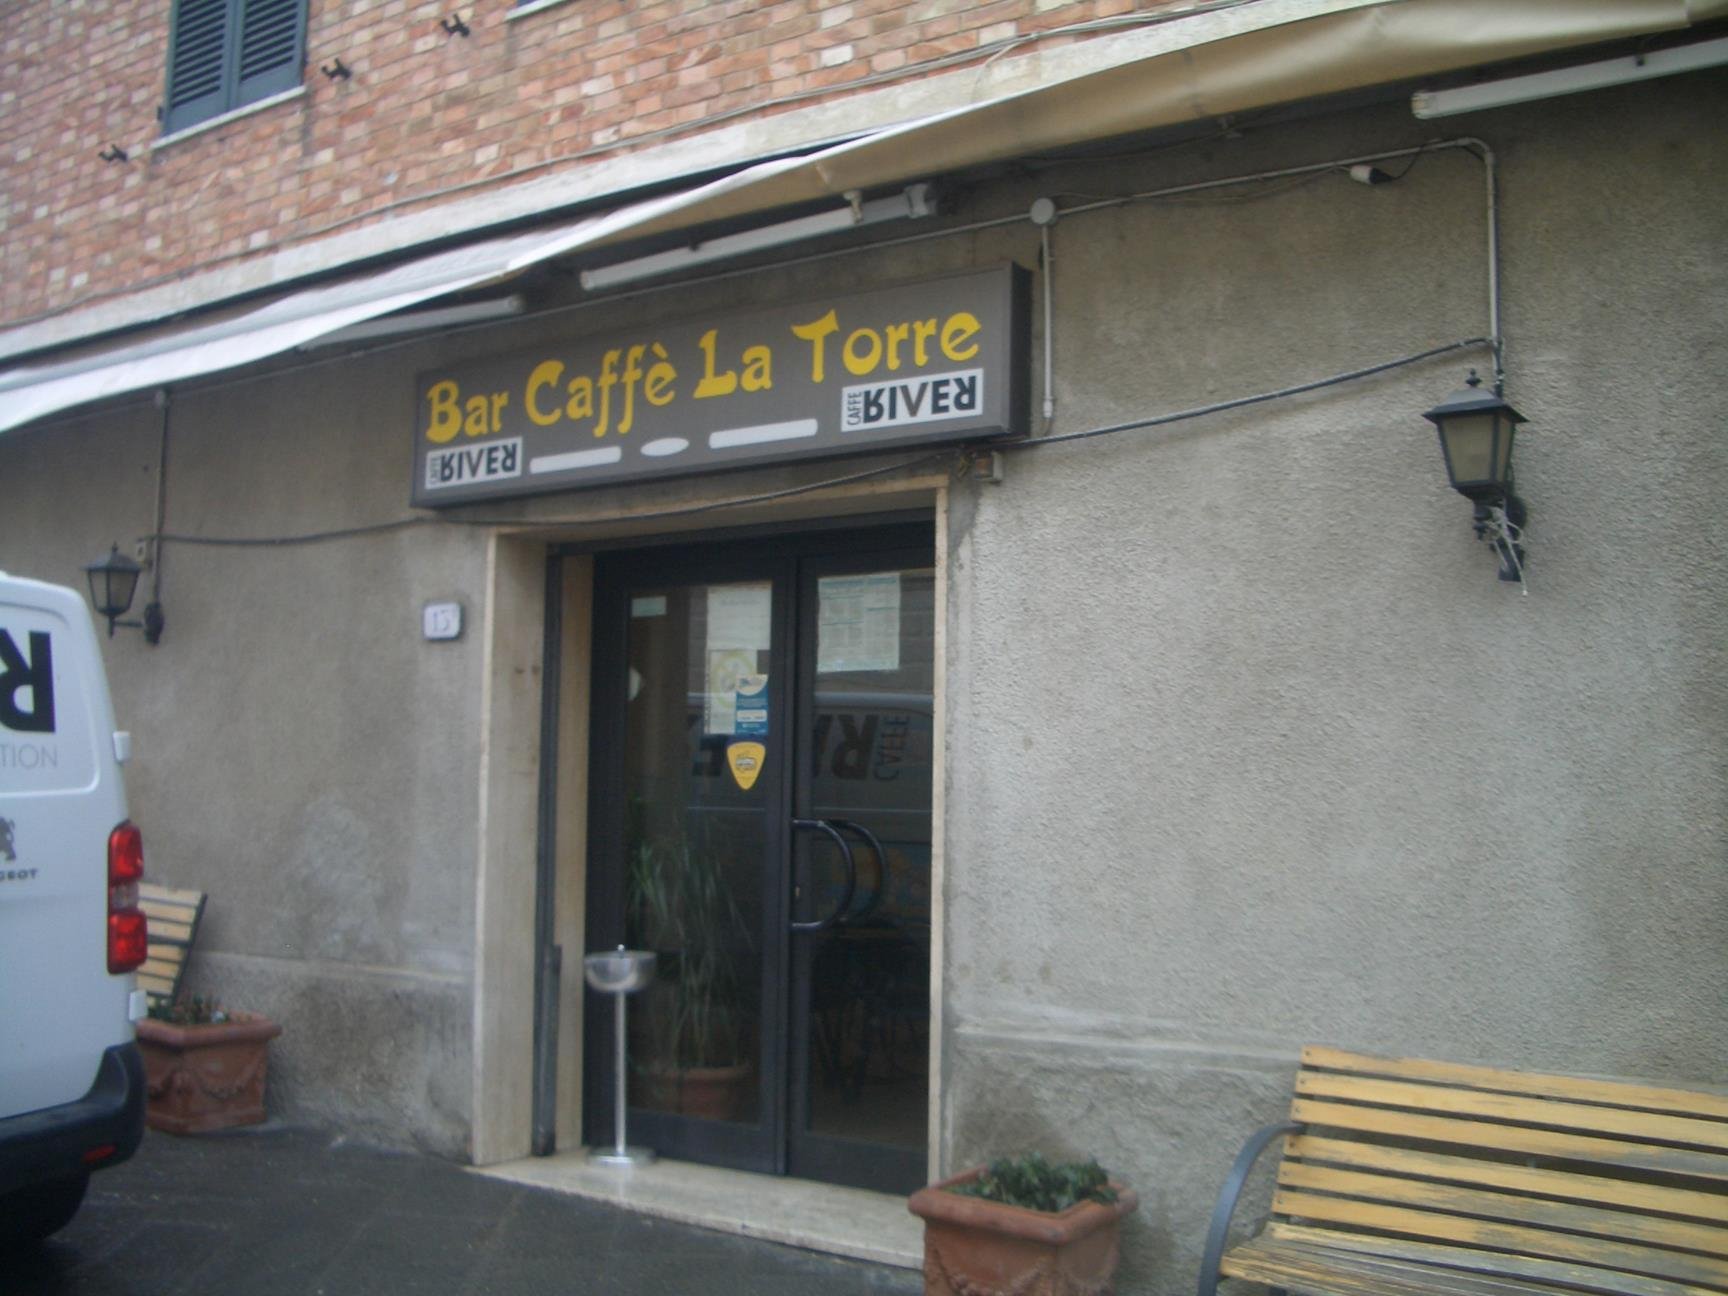 Bar Caffe La Torre, Trequanda